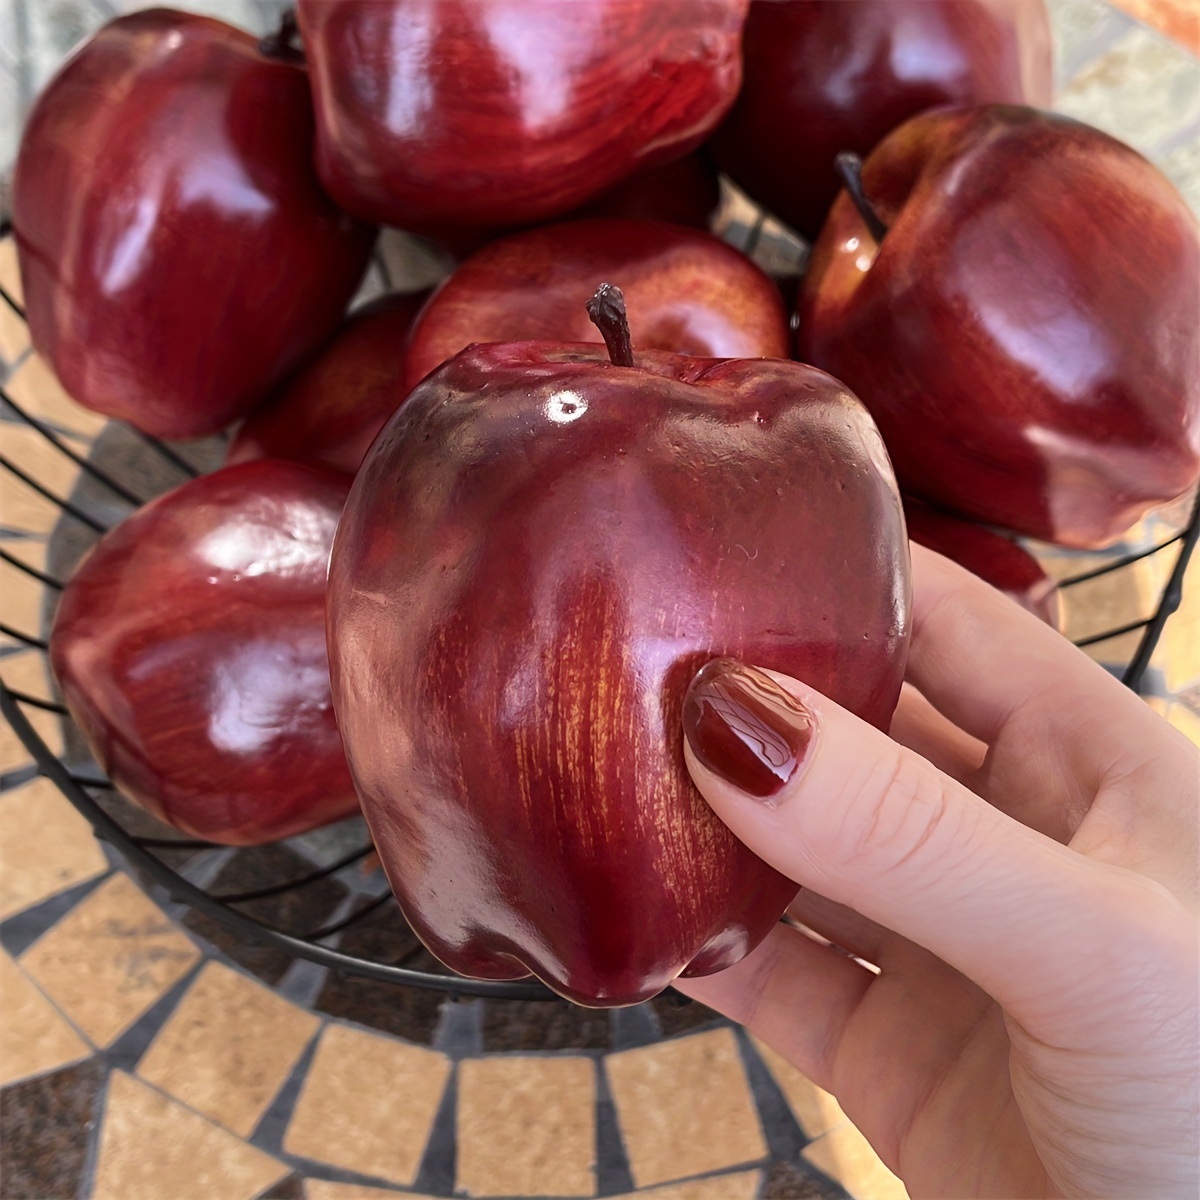  10 Pcs Artificial Apples Fake Frutis Apples, Simulation Apples  for Home Decoration Lifelike Normal Size Apples Fake Apples for Kichen  Party Chirstmas Decor (5Pcs Red Apple + 5 Pcs Green Apple) 